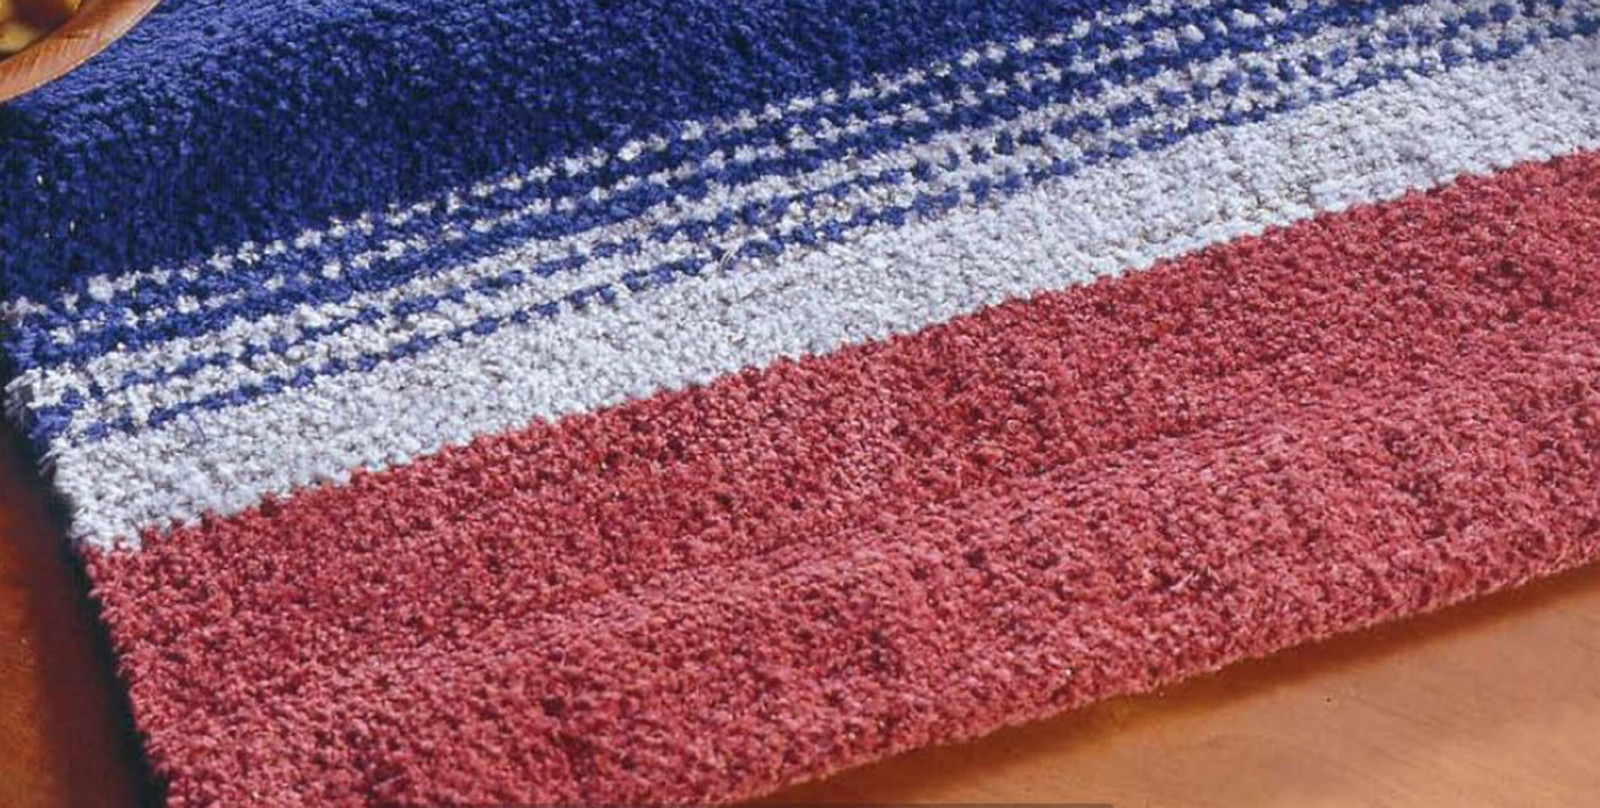 Weaving Rag Rugs, How To Hand Weave A Wool Rug